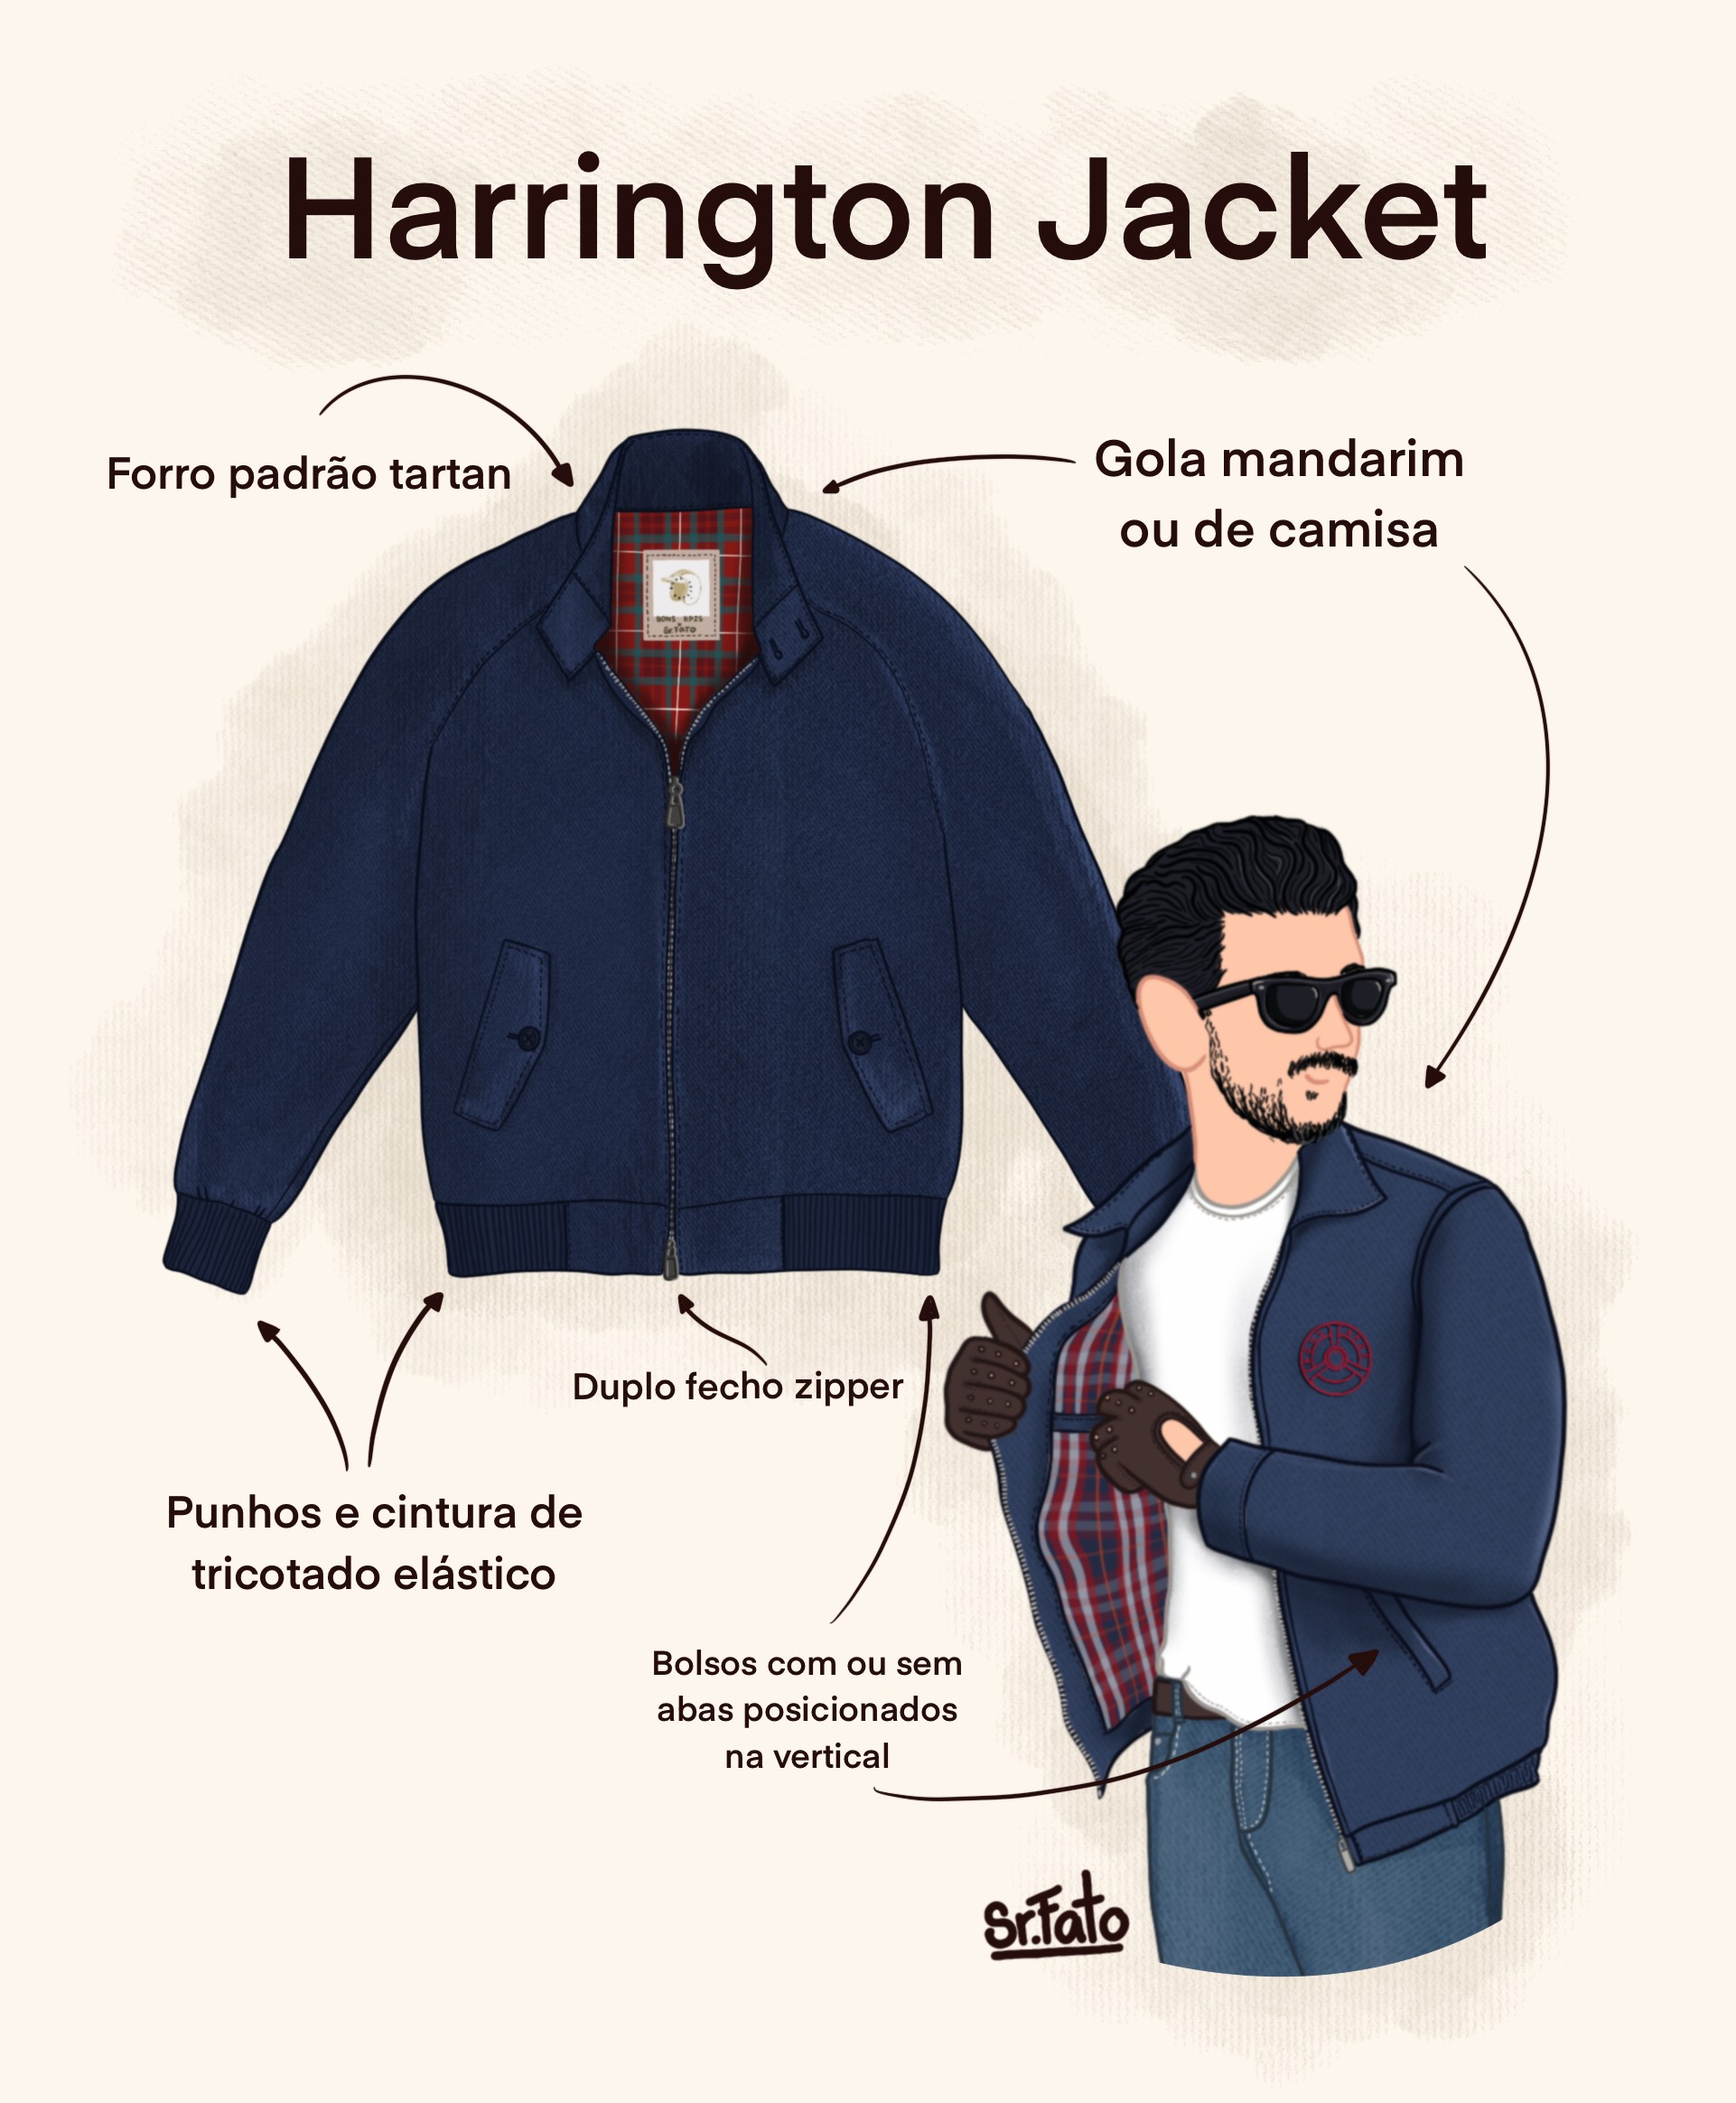 Harrington Jacket